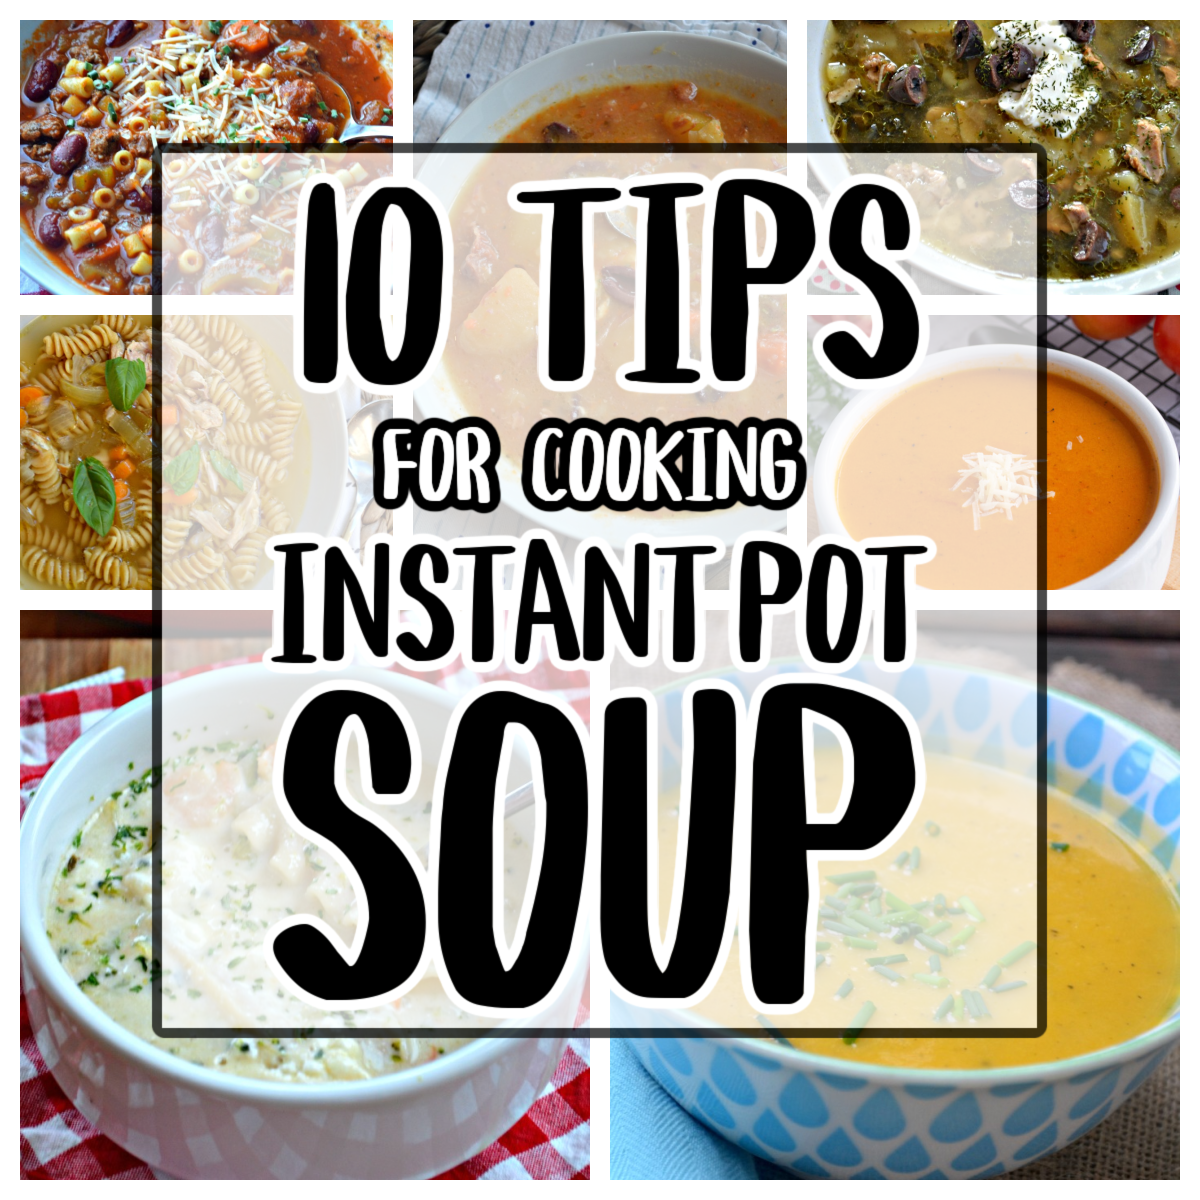 12 Amazing 10 Minute Instant Pot Recipes